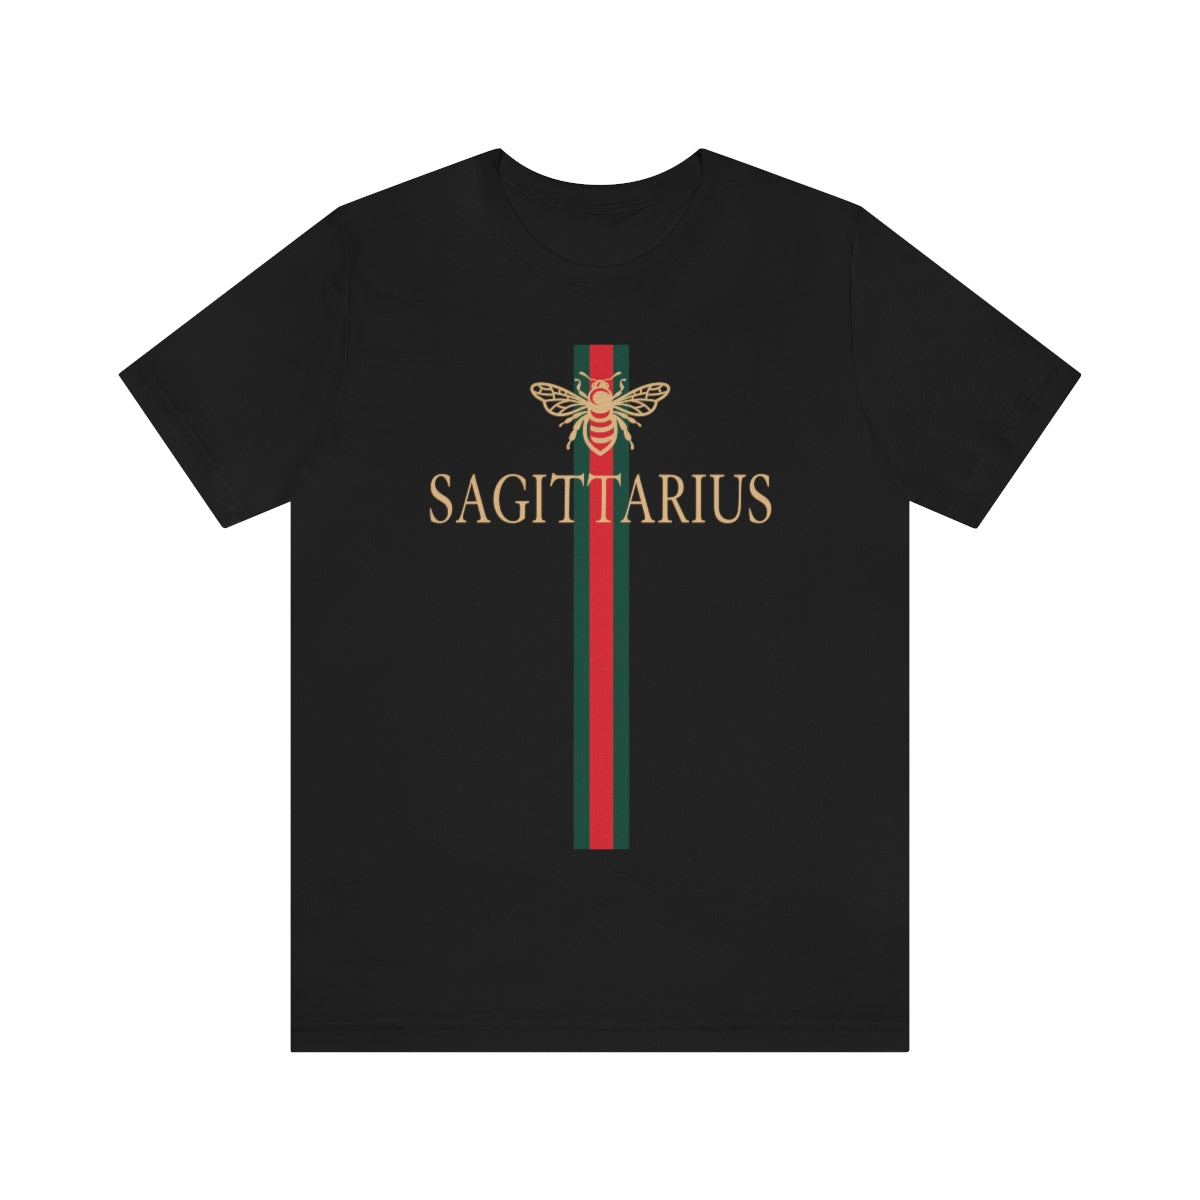 Sagittarius Bee Girl Shirt